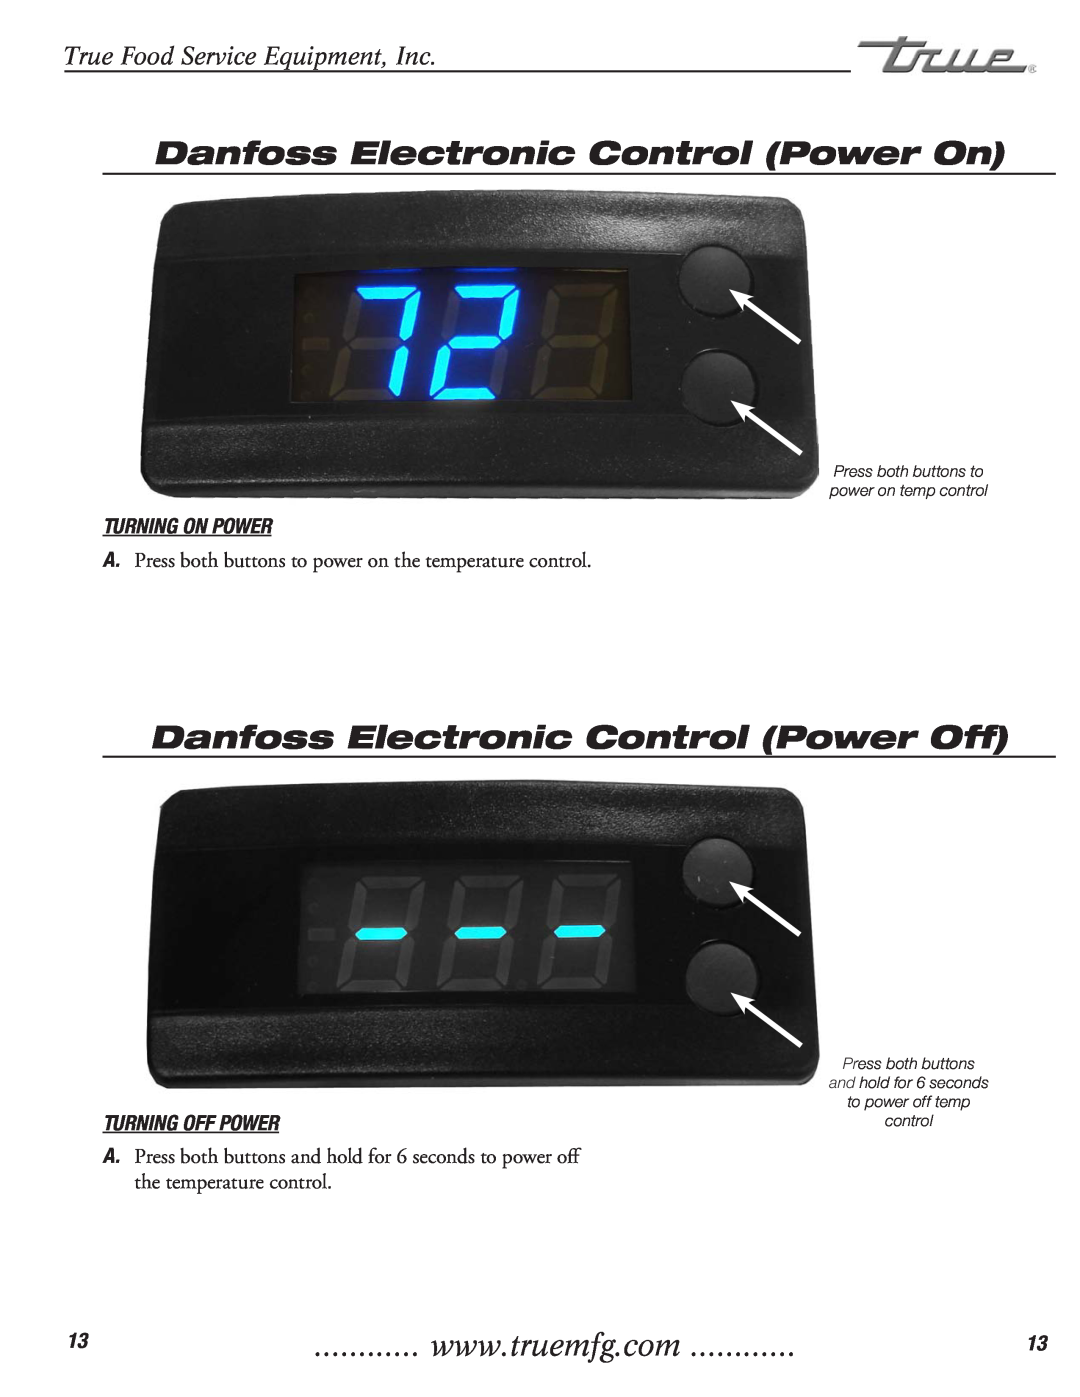 True Manufacturing Company T-23DT Danfoss Electronic Control Power On, Danfoss Electronic Control Power Off 